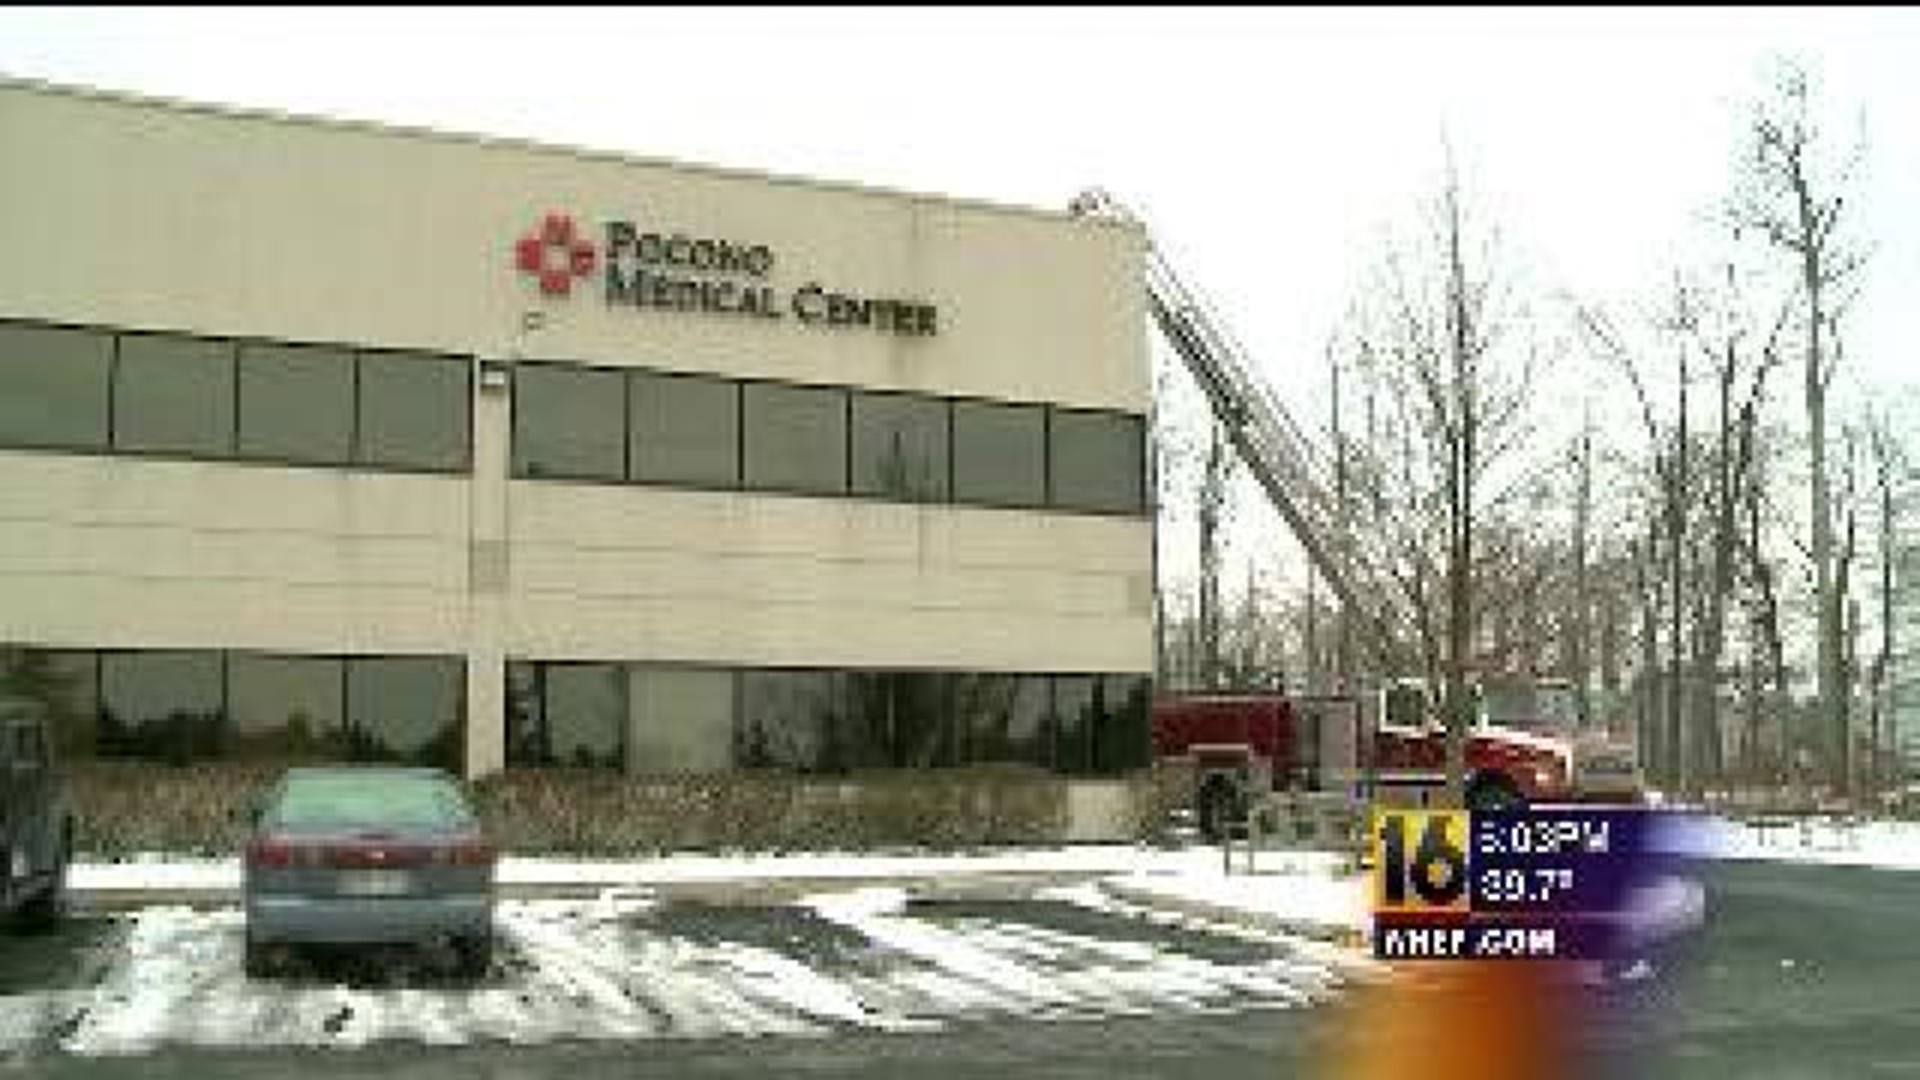 Mystery Illness Sends Ten to Poconos Hospital